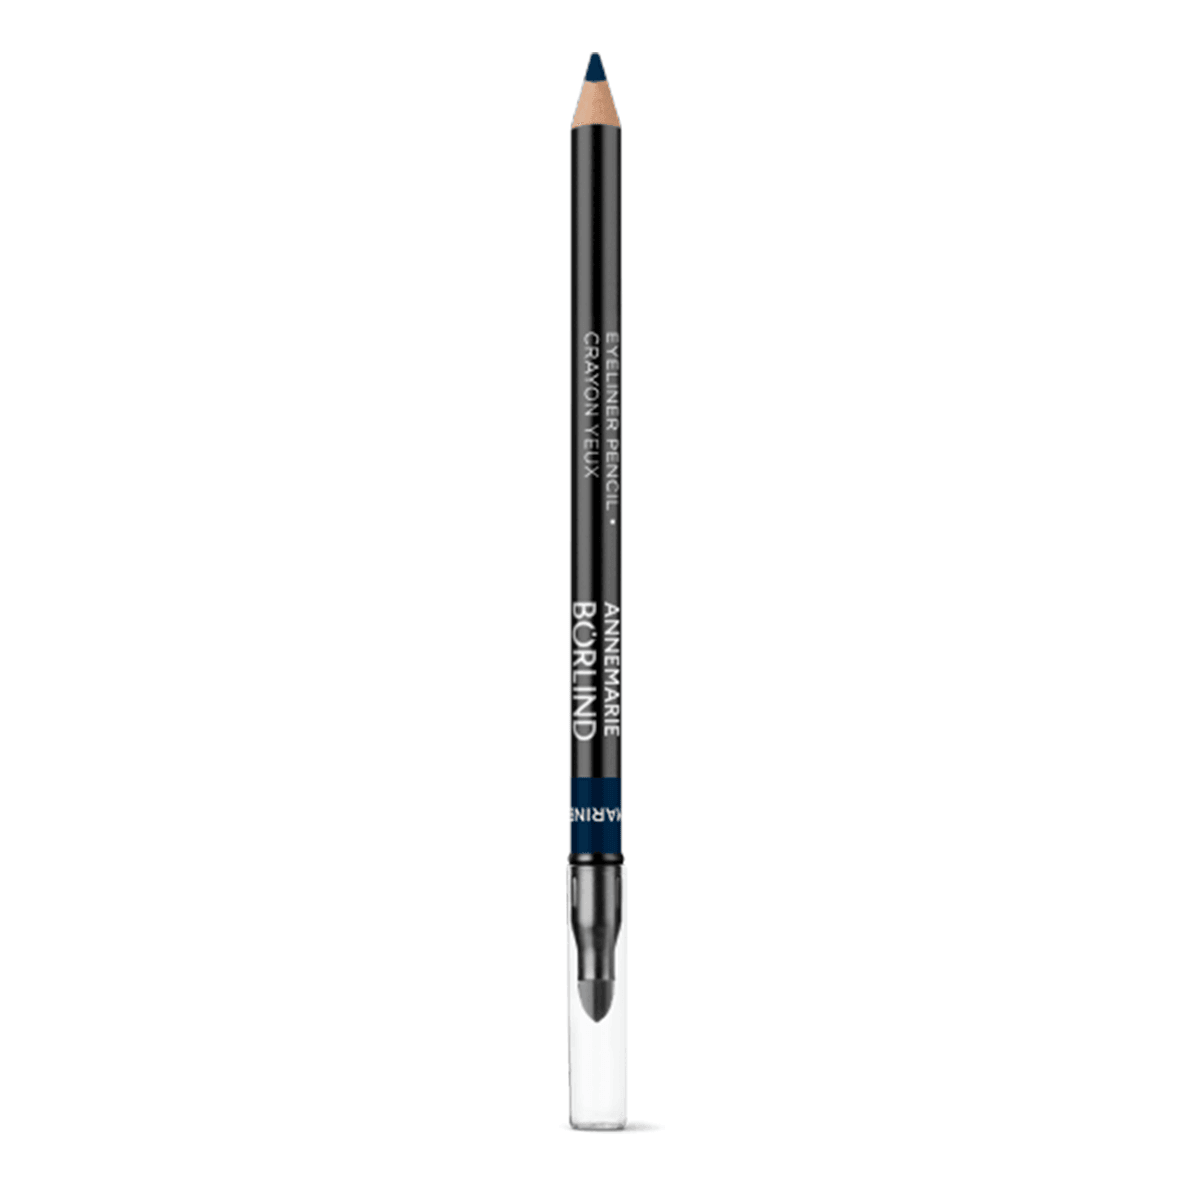 Annemarie Borlind Eyeliner Pencil Marine Blue 1g Cosmetics - Eye Makeup at Village Vitamin Store